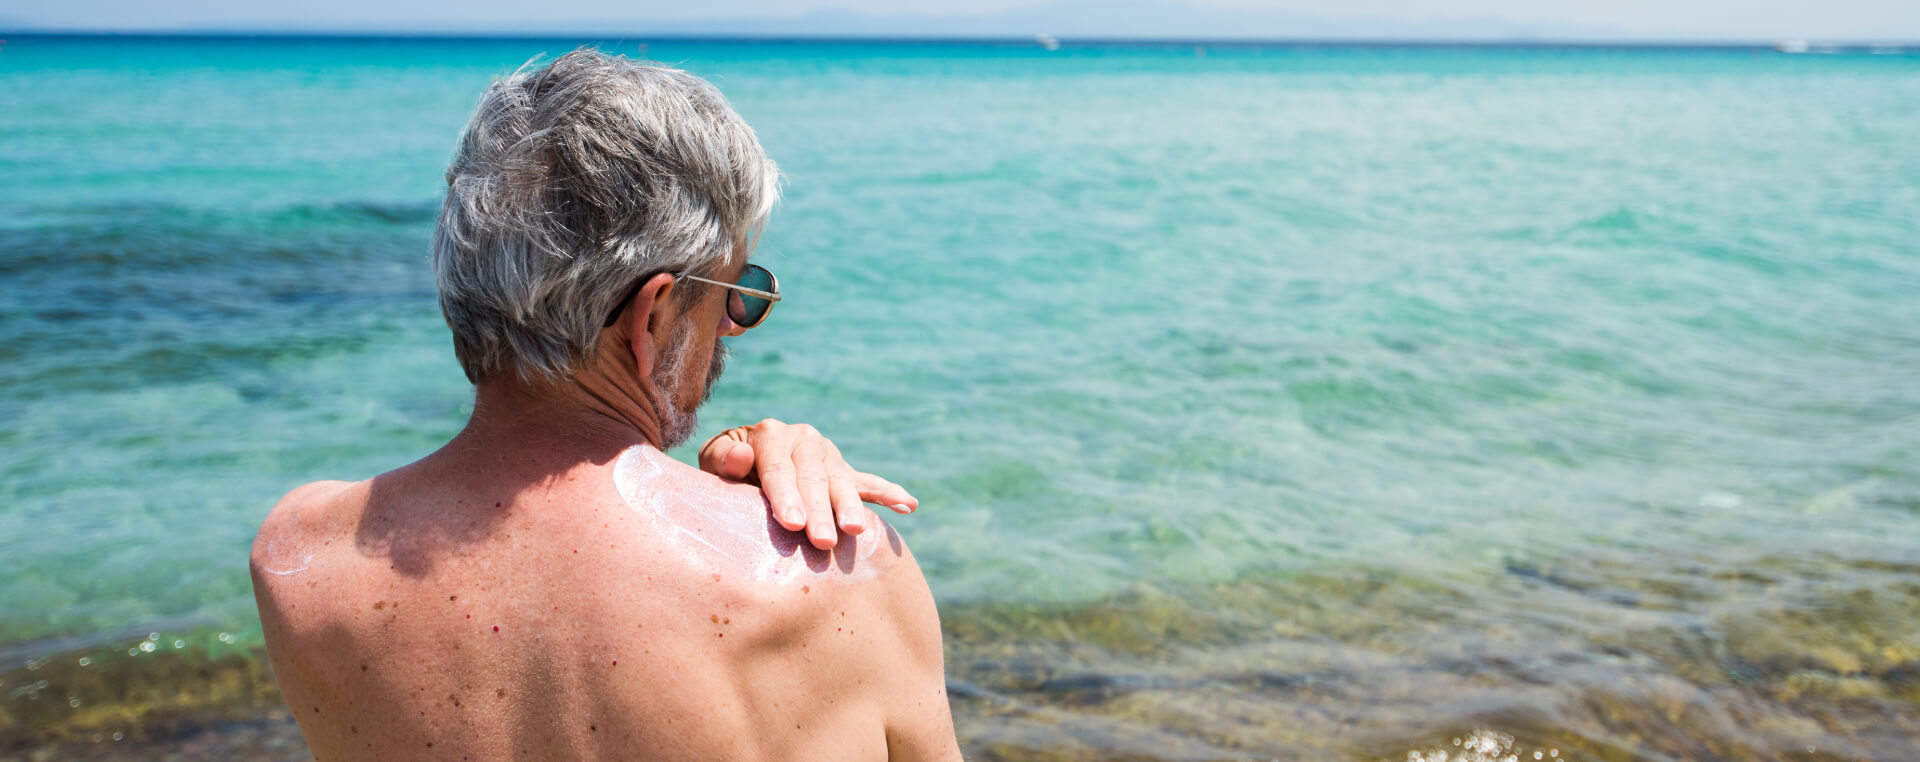 An older man wearing sunglasses applies suntan lotion to his upper back at a beach.